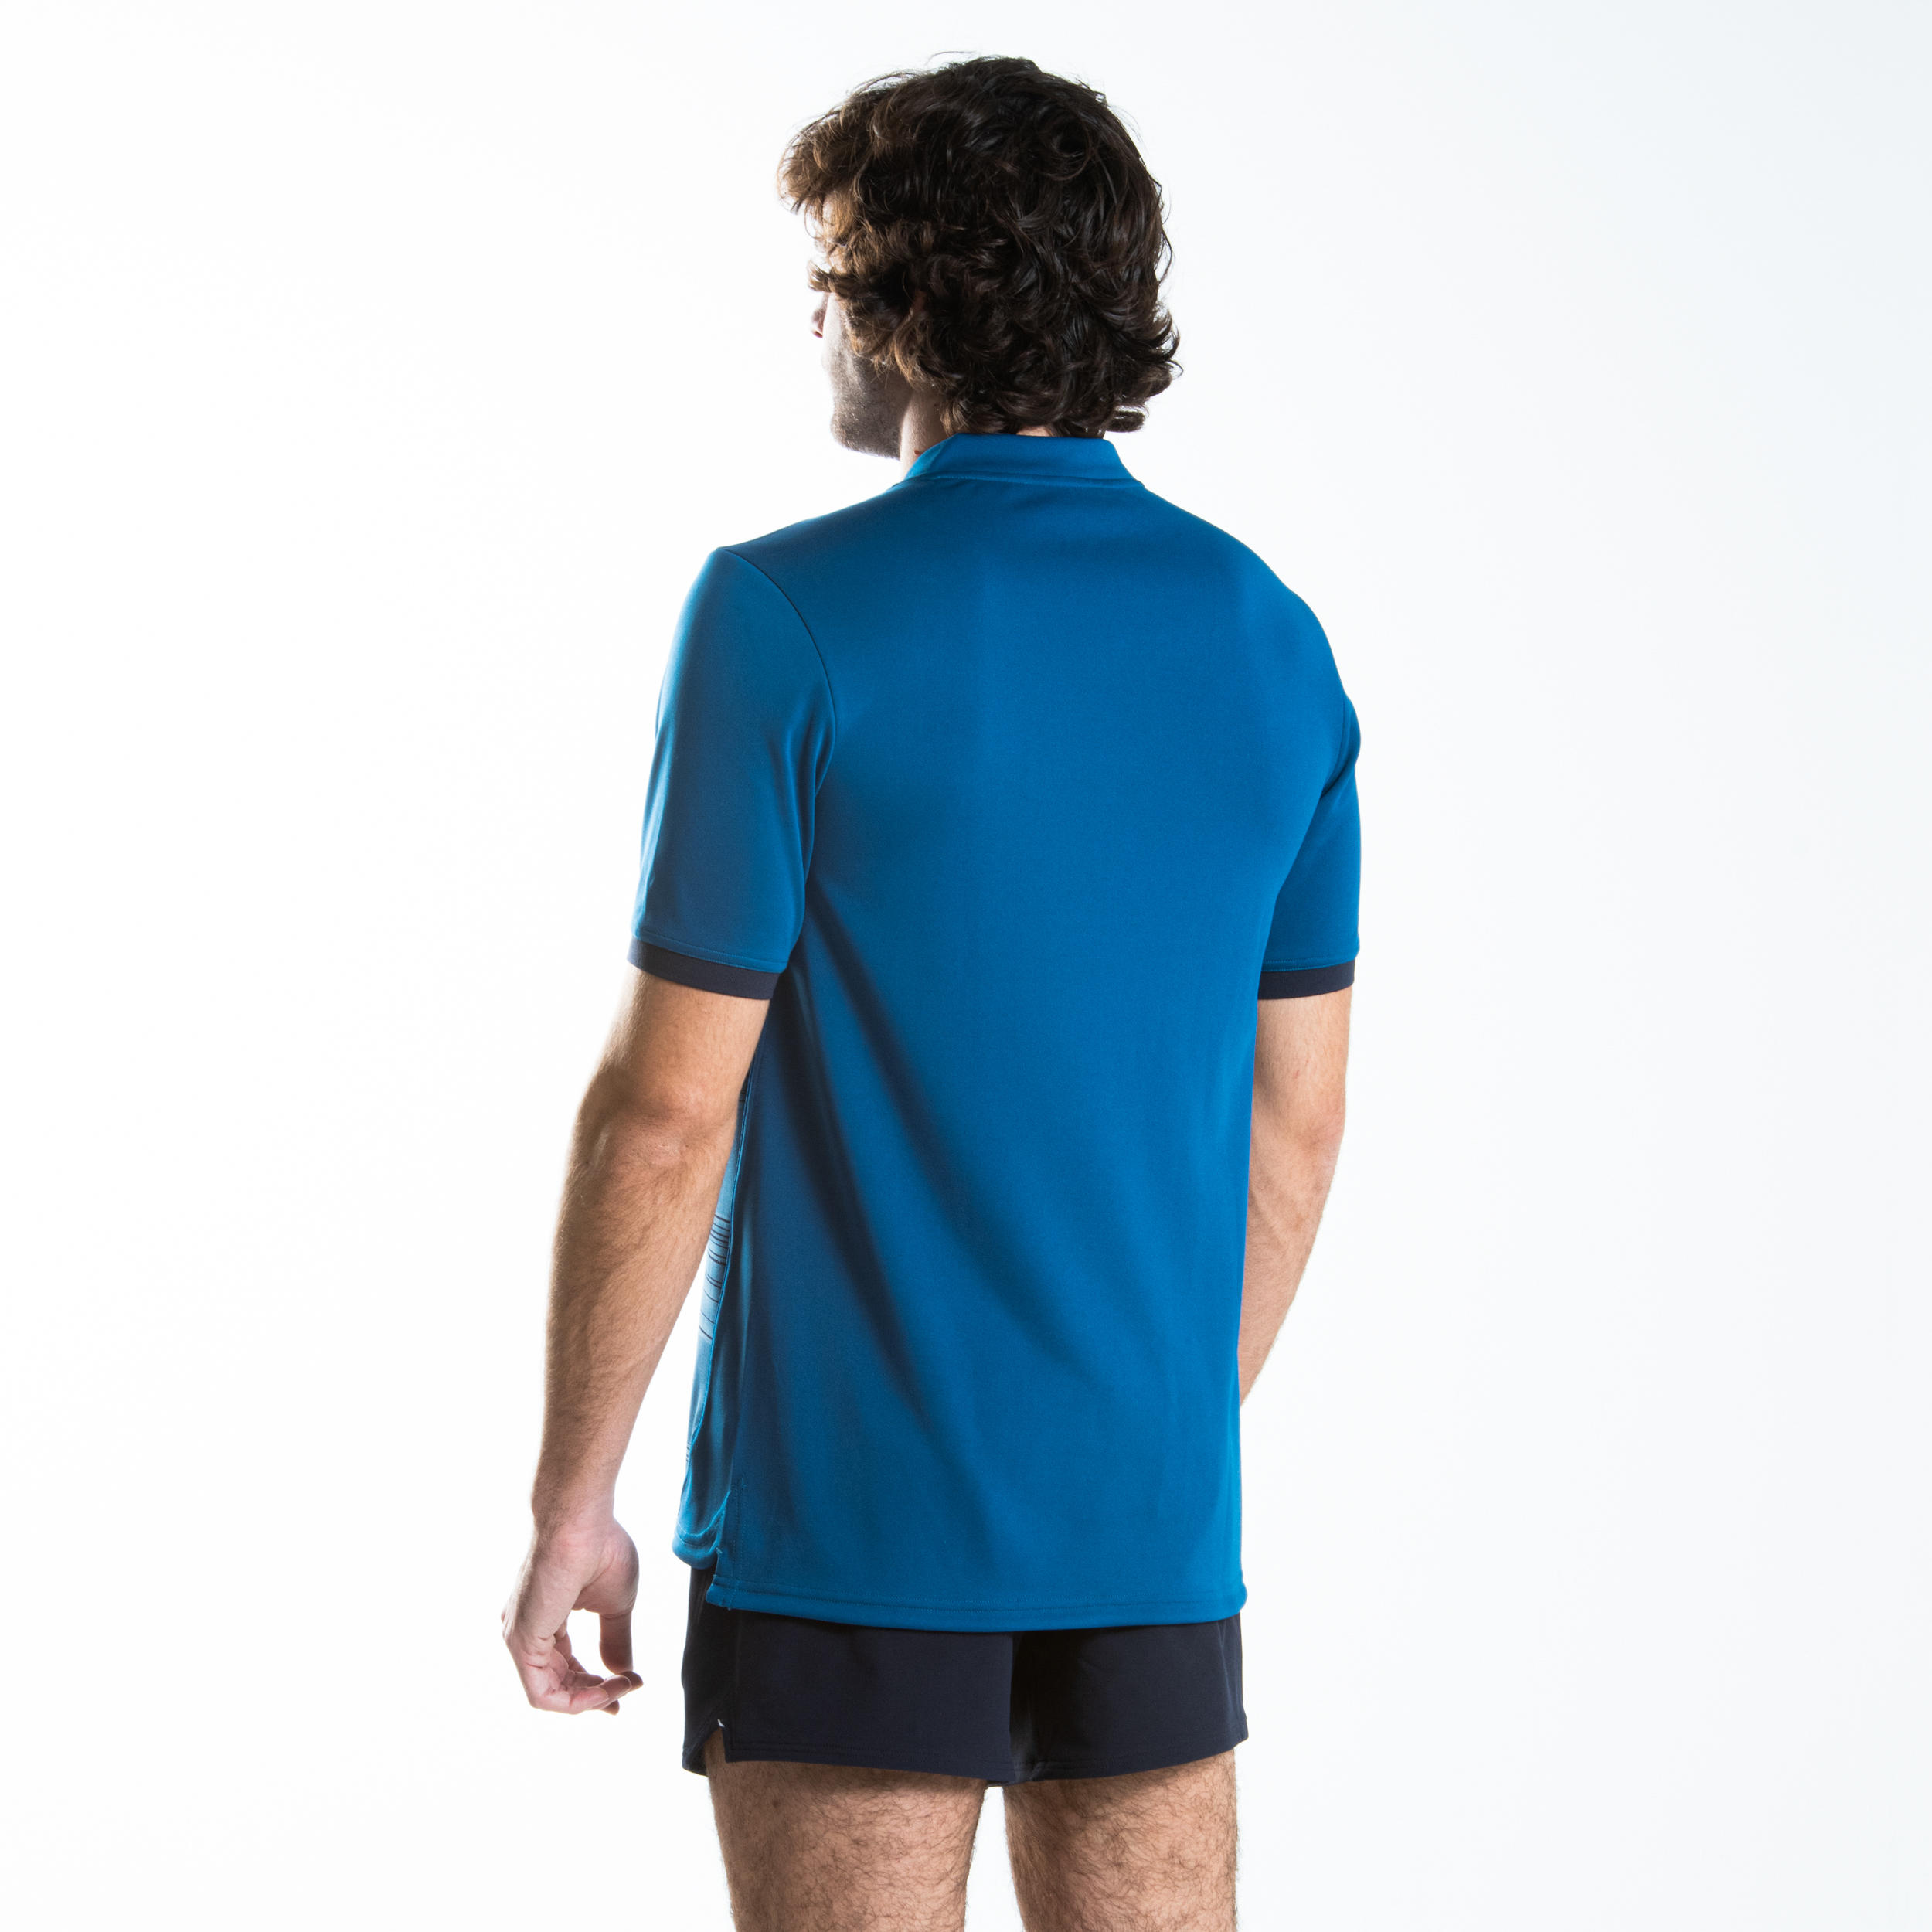 Men's Short-Sleeved Rugby Shirt R500 - Blue 7/8